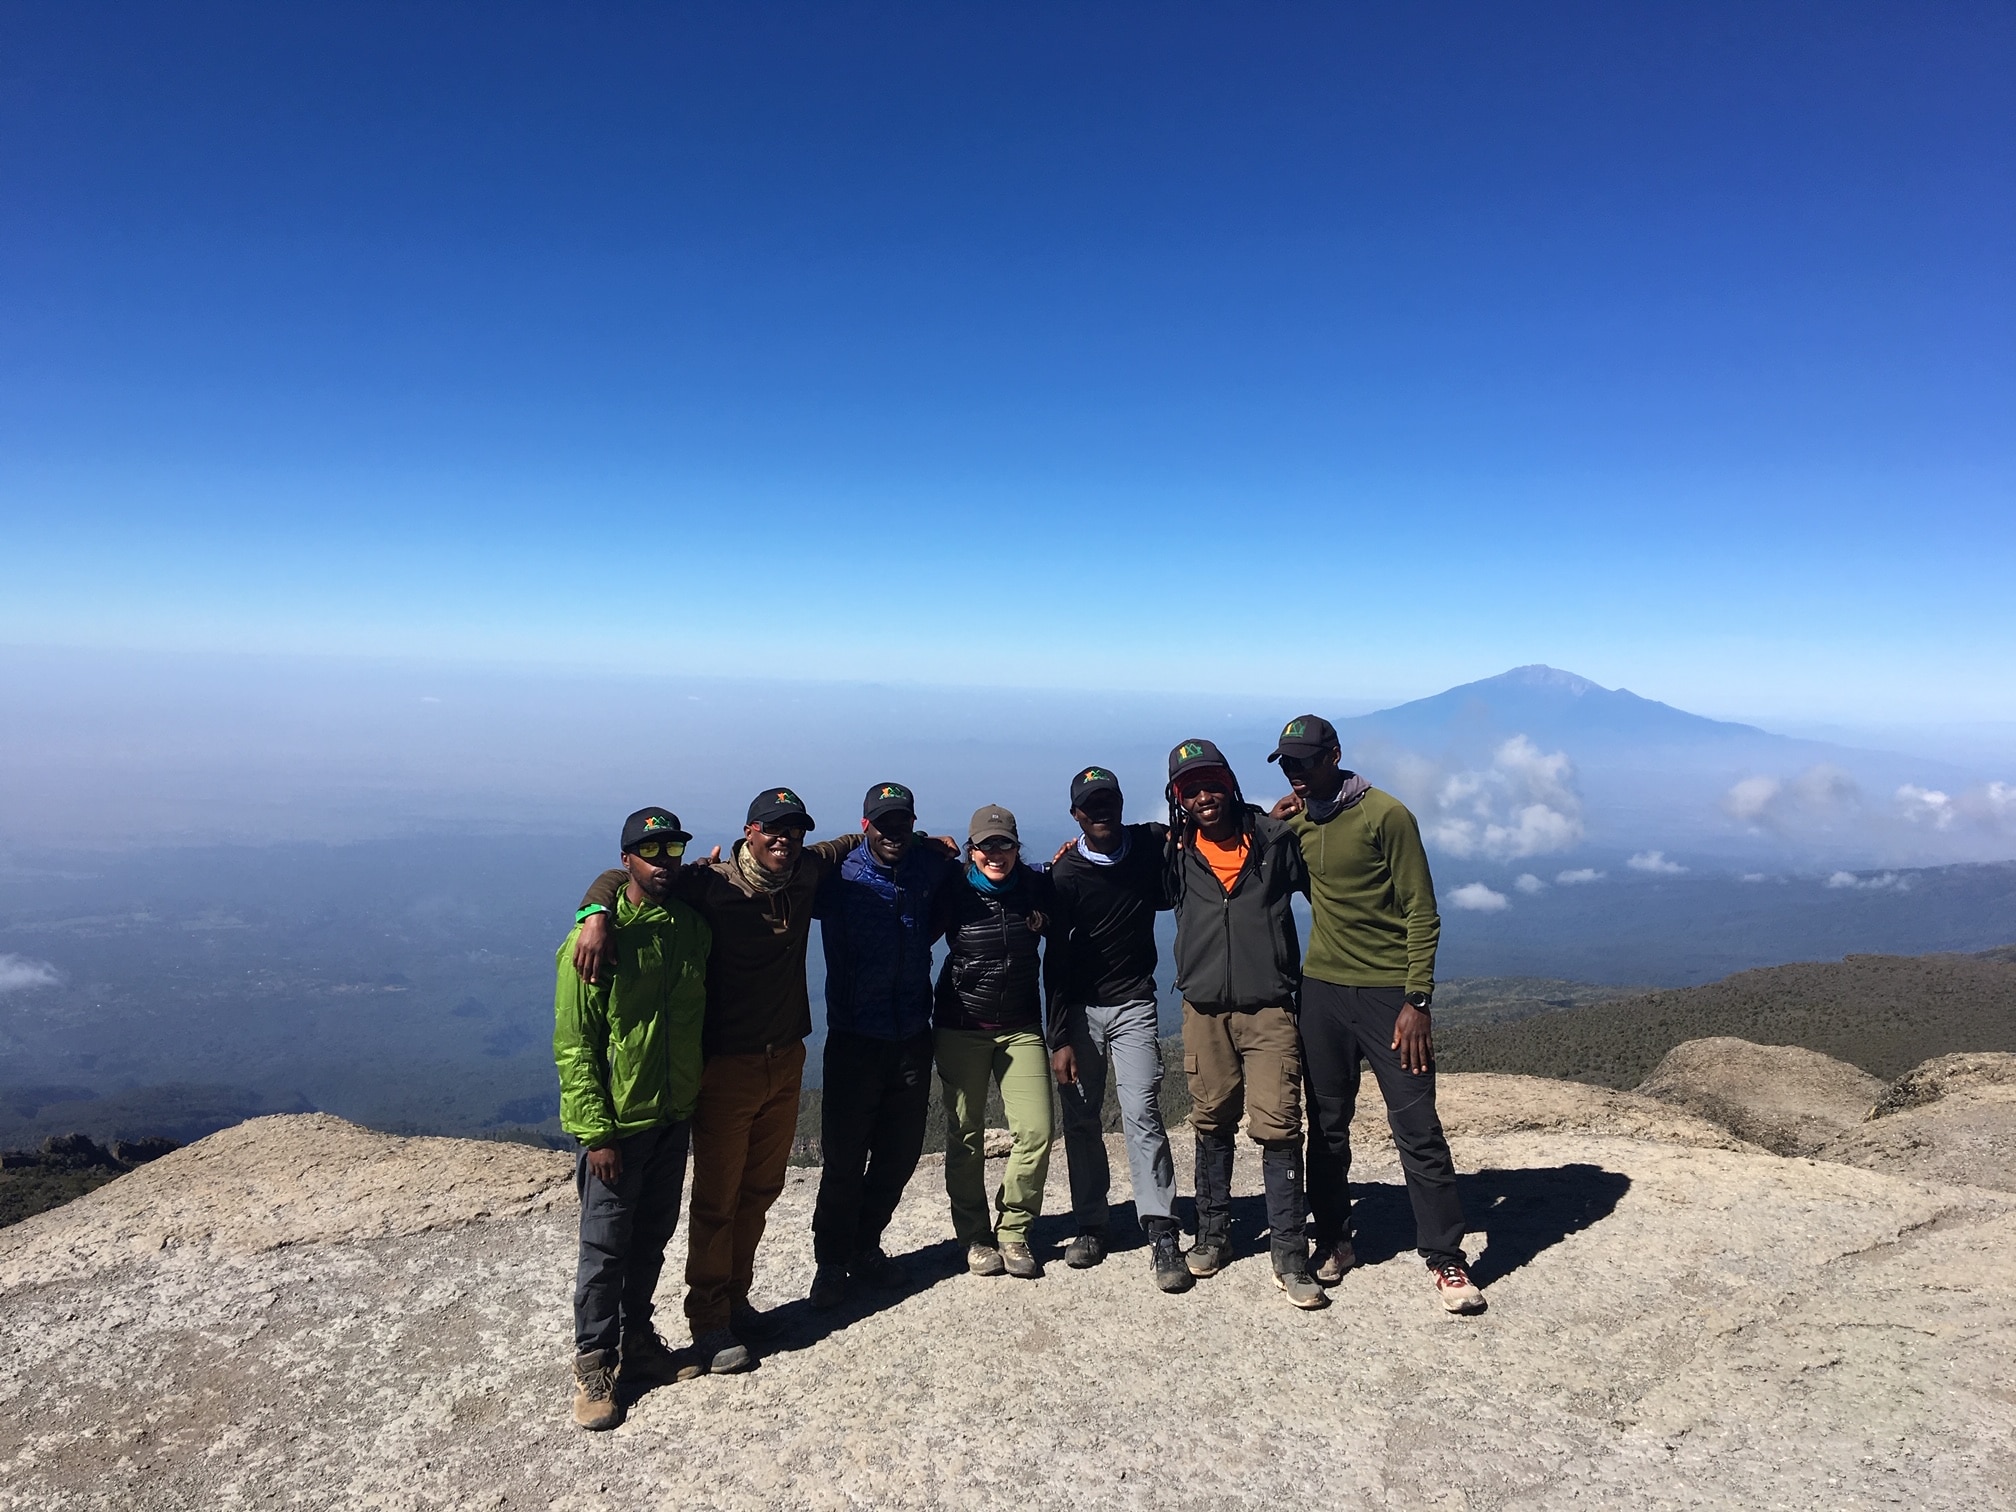 Climb Kilimanjaro with the Dream Team